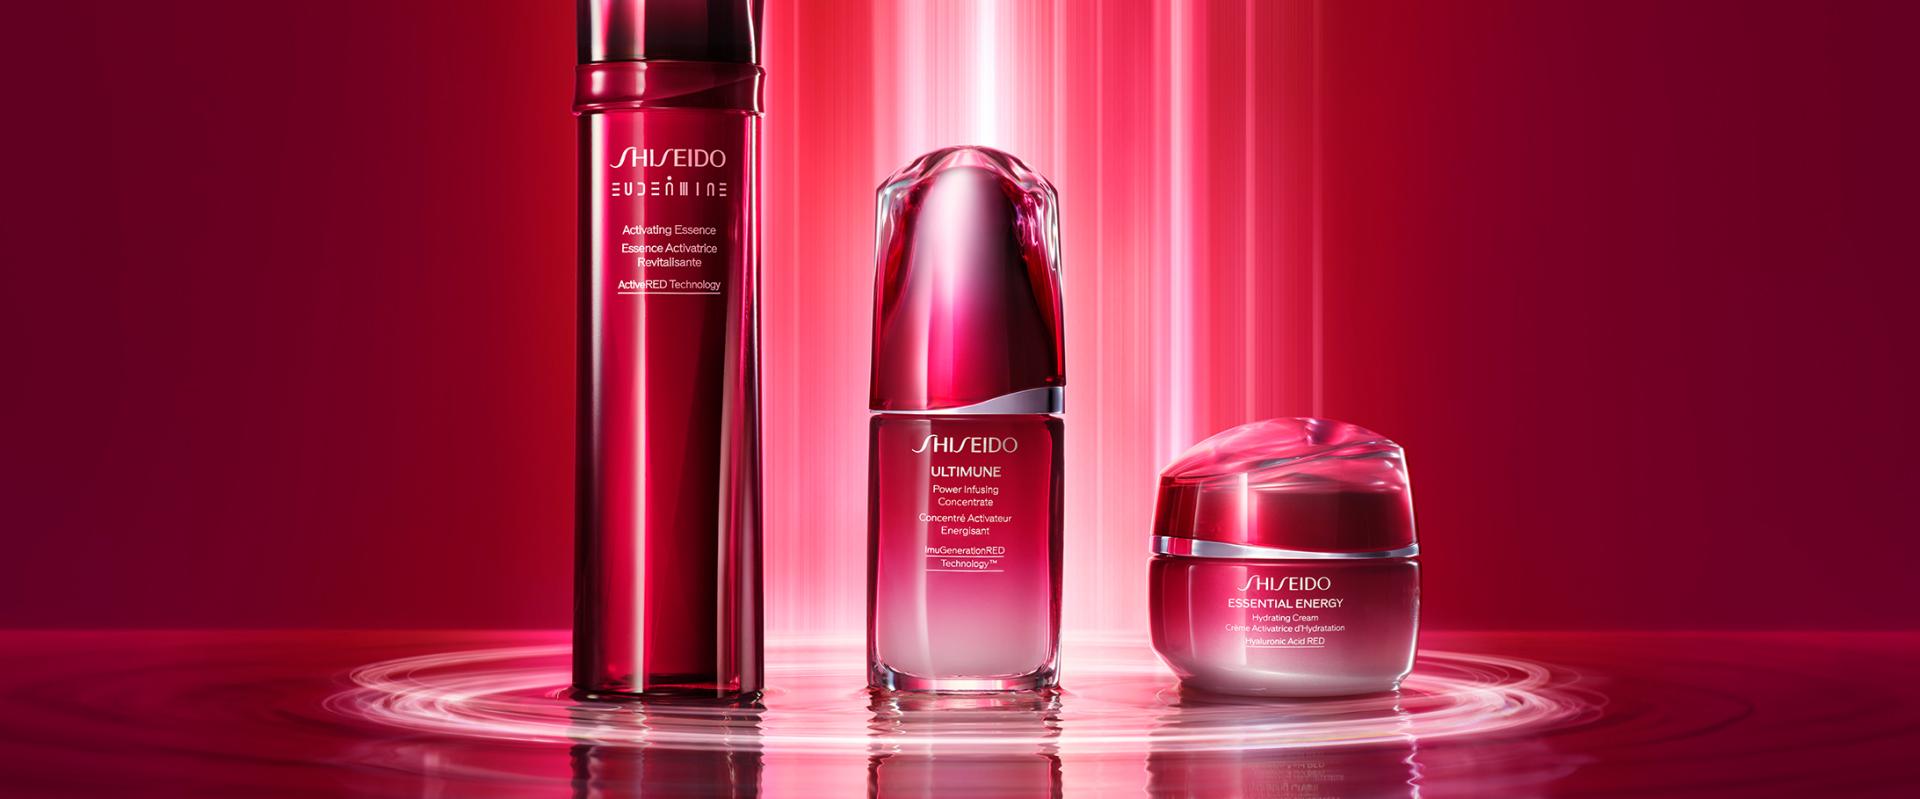 Oferta pracy: Pollux - Brand Manager Shiseido